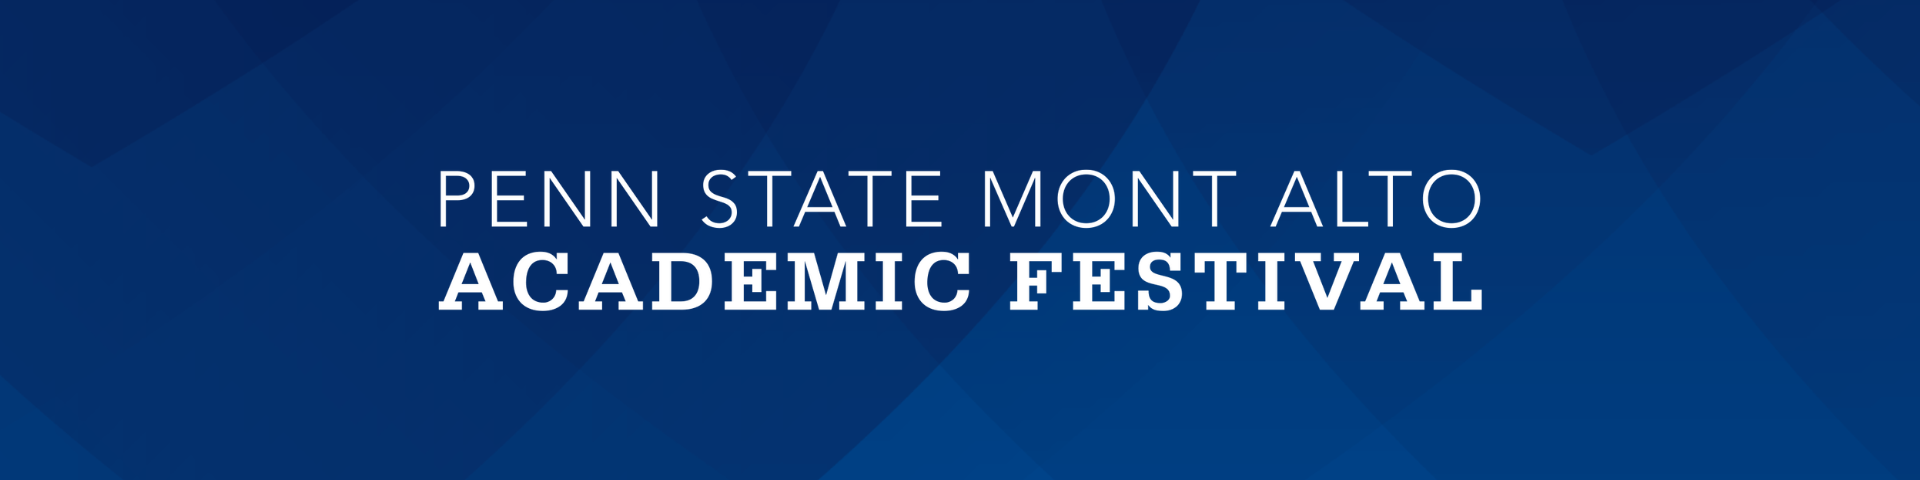 "Penn State Mont Alto Academic Festival" text on blue background